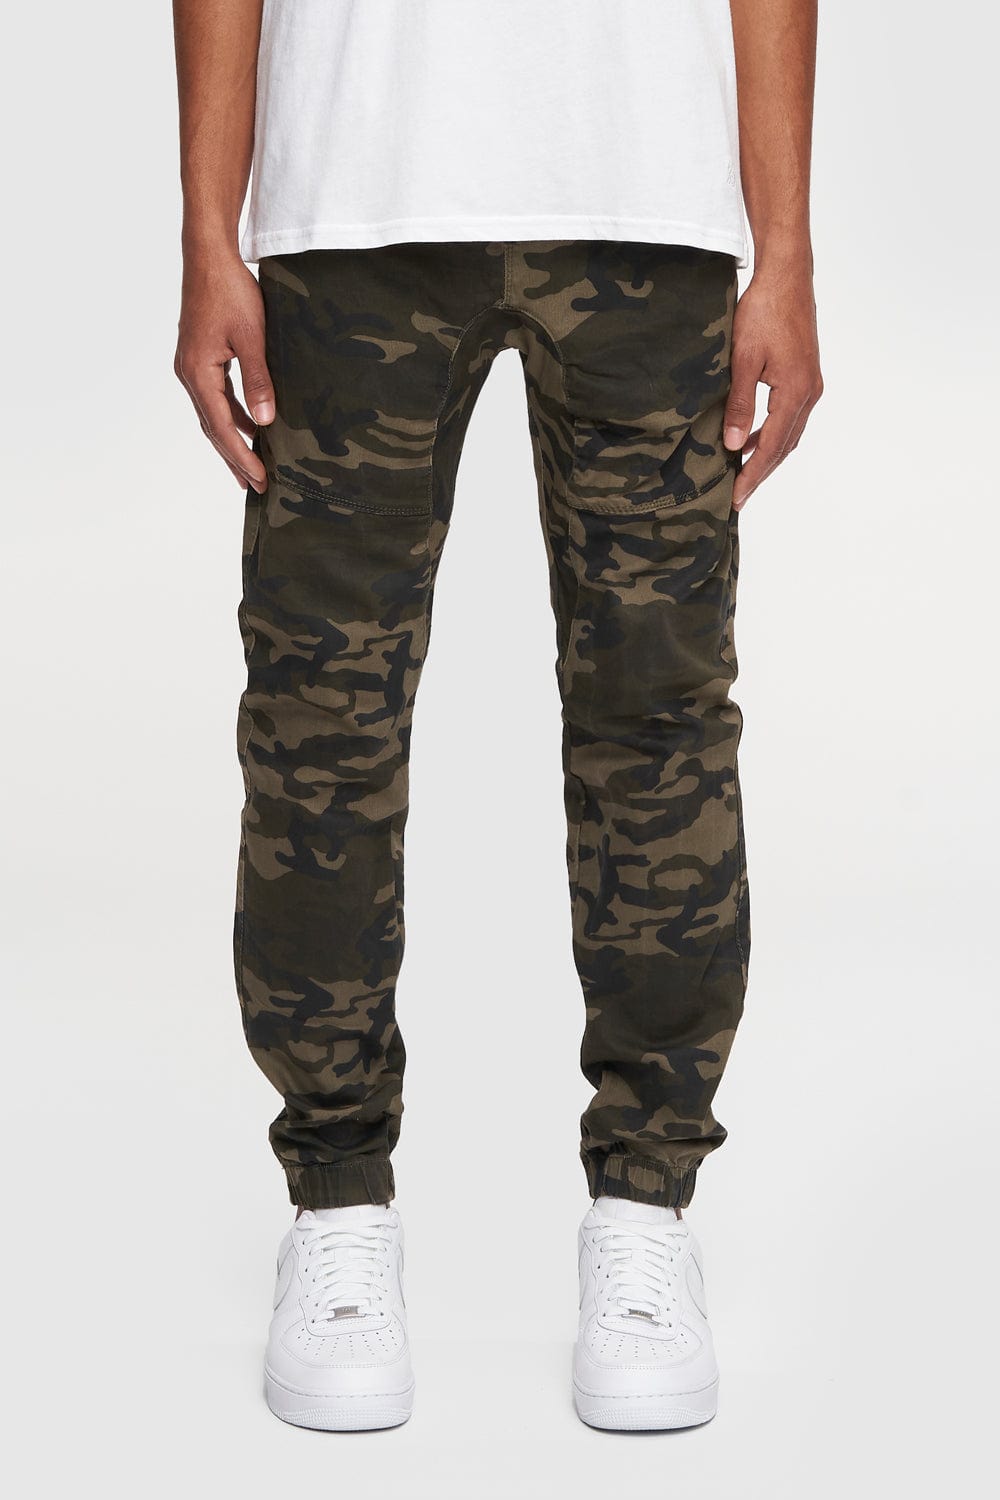 SEONE-G Six Pocket Pants for Boys -Boys Stylish Jogger Pants/Boys Jogger  Jeans